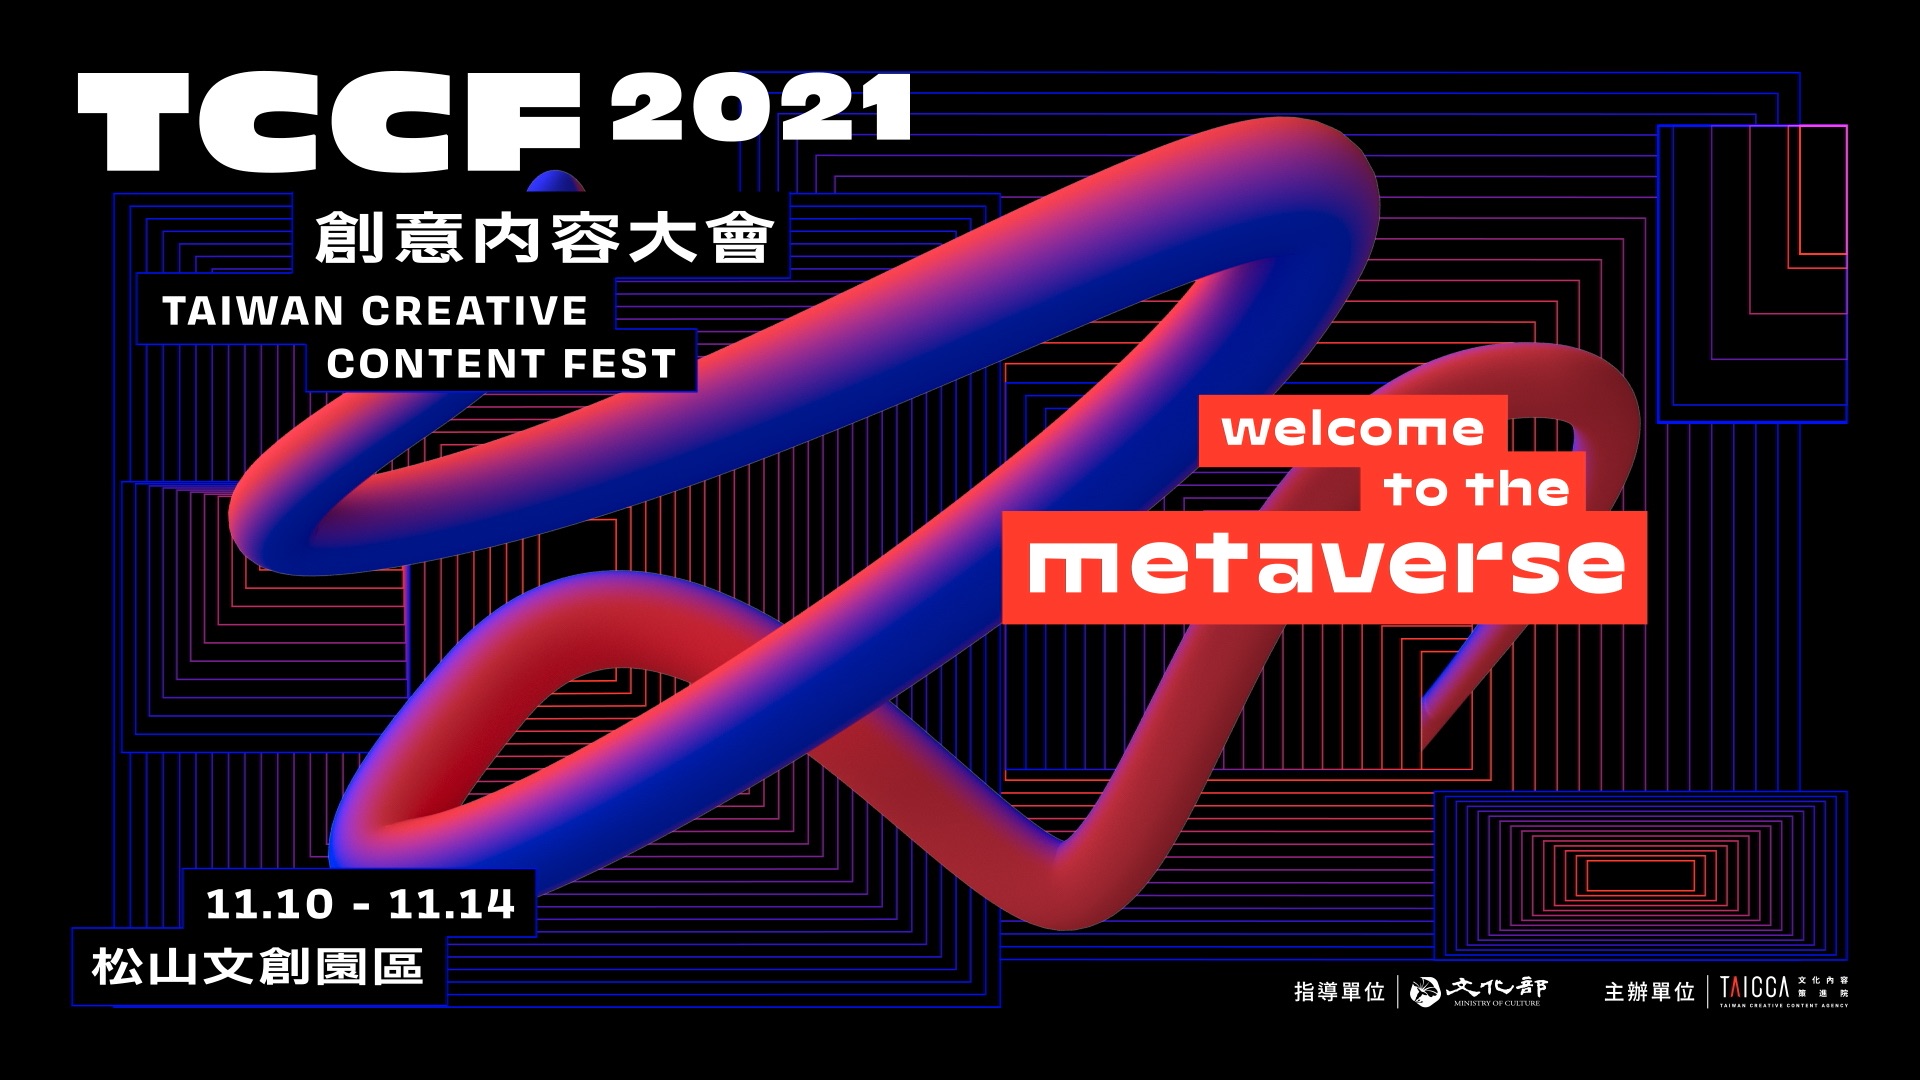 2021 Taiwan Creative Content Fest (TCCF)